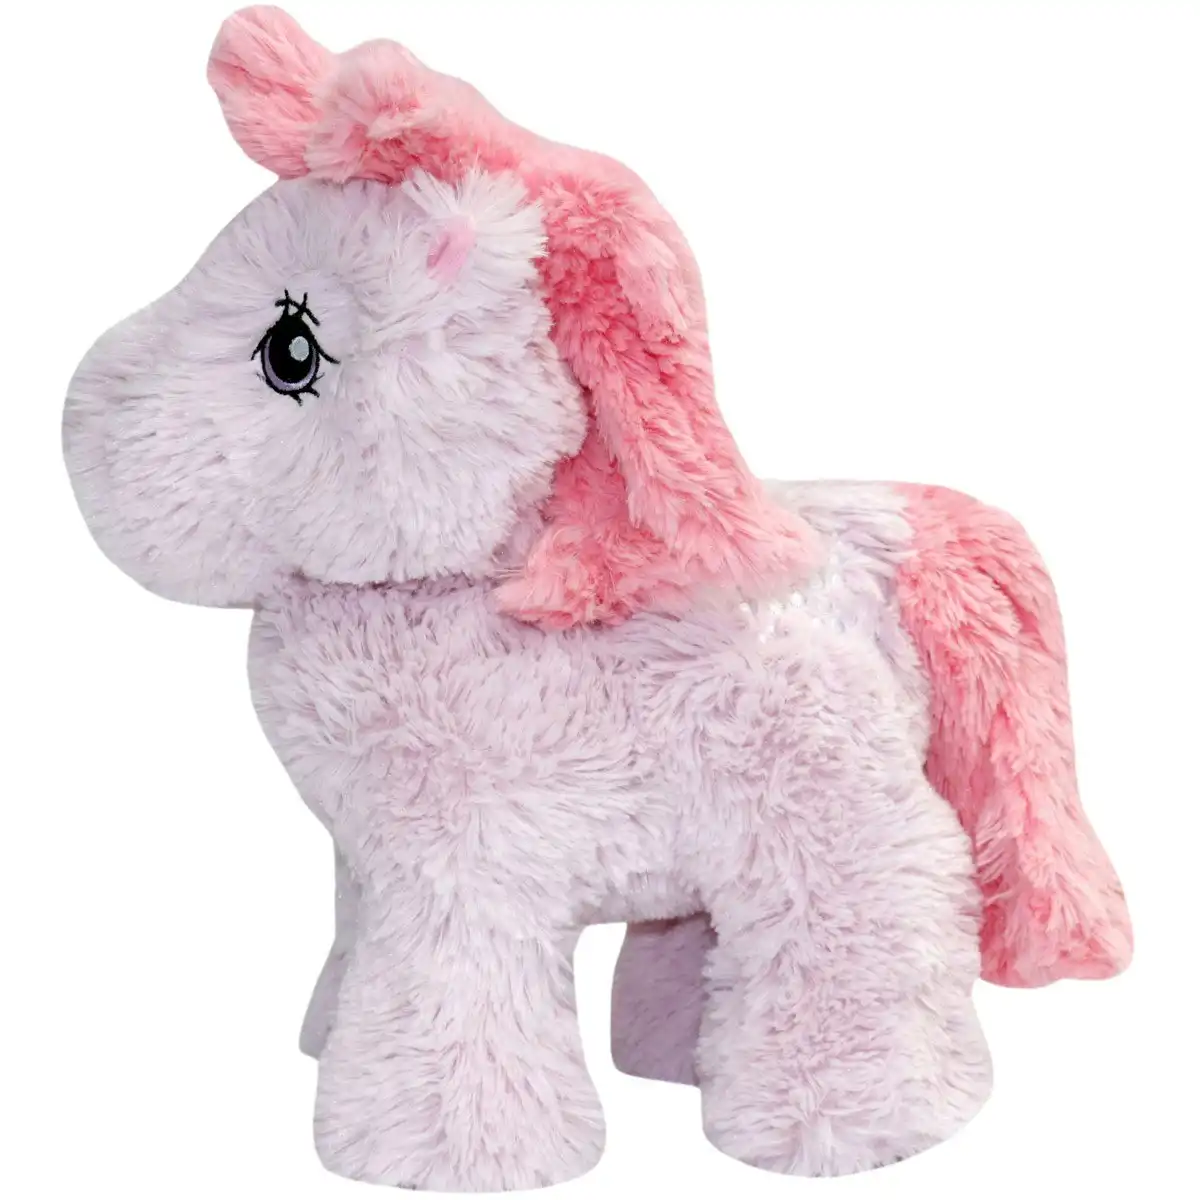 Resoftable My Little Pony 12" Cotton Candy Plush